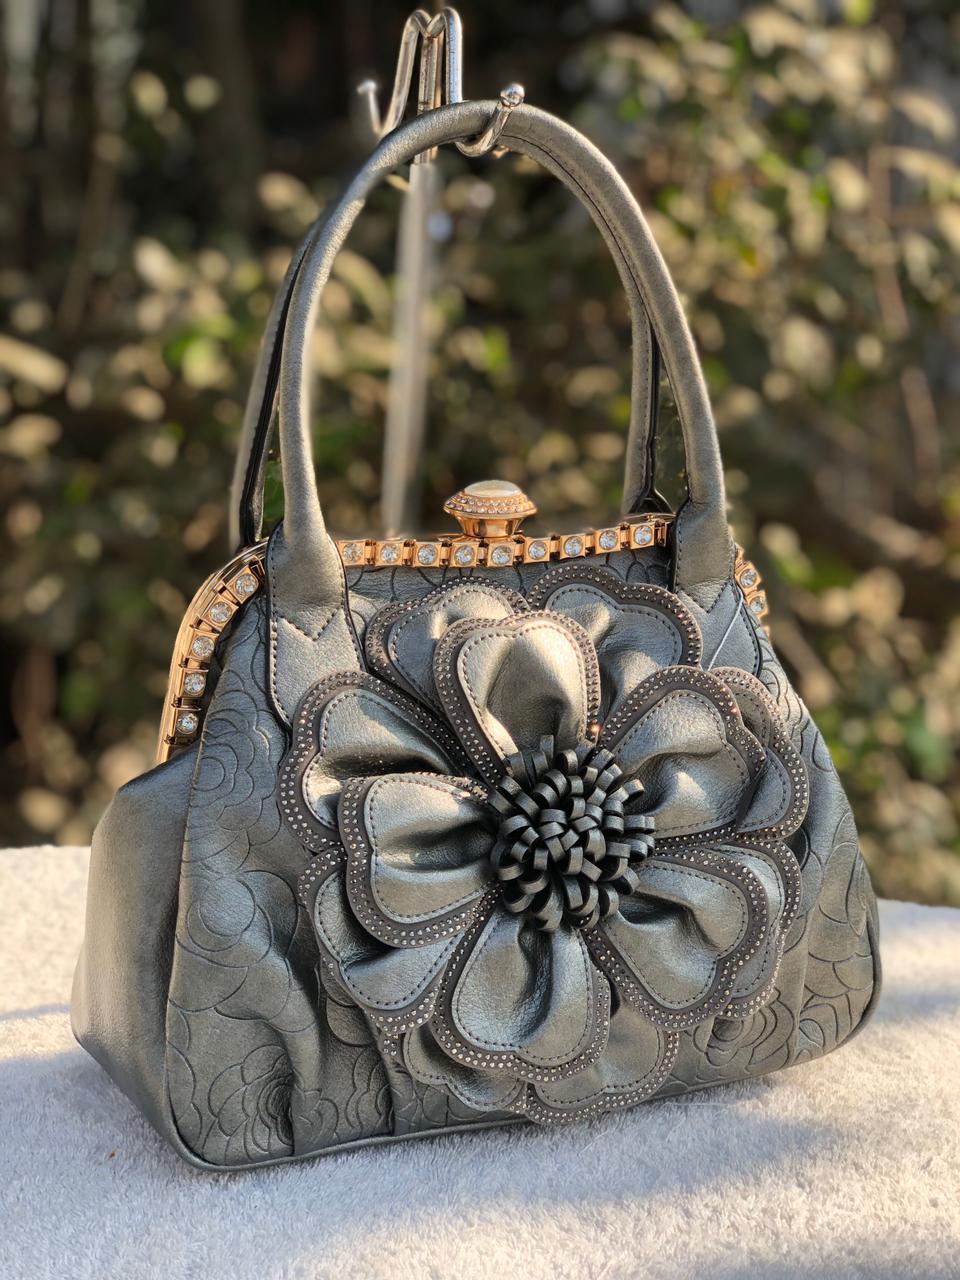 Brown Leather Handbag with Floral Design | Handbags